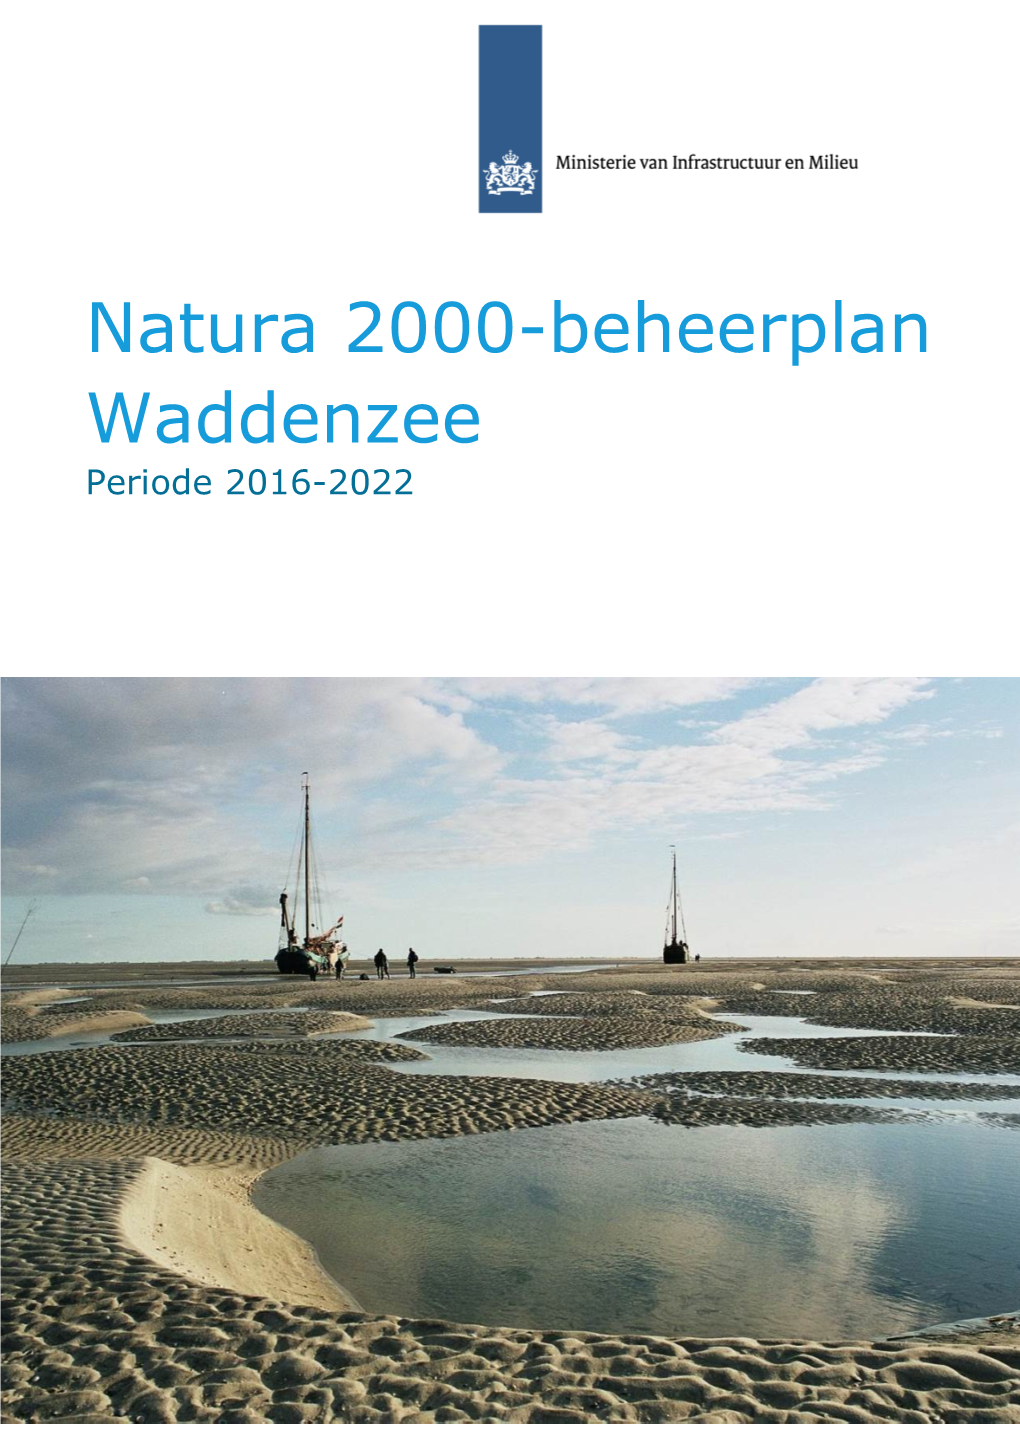 Beheerplan Waddenzee Periode 2016-2022